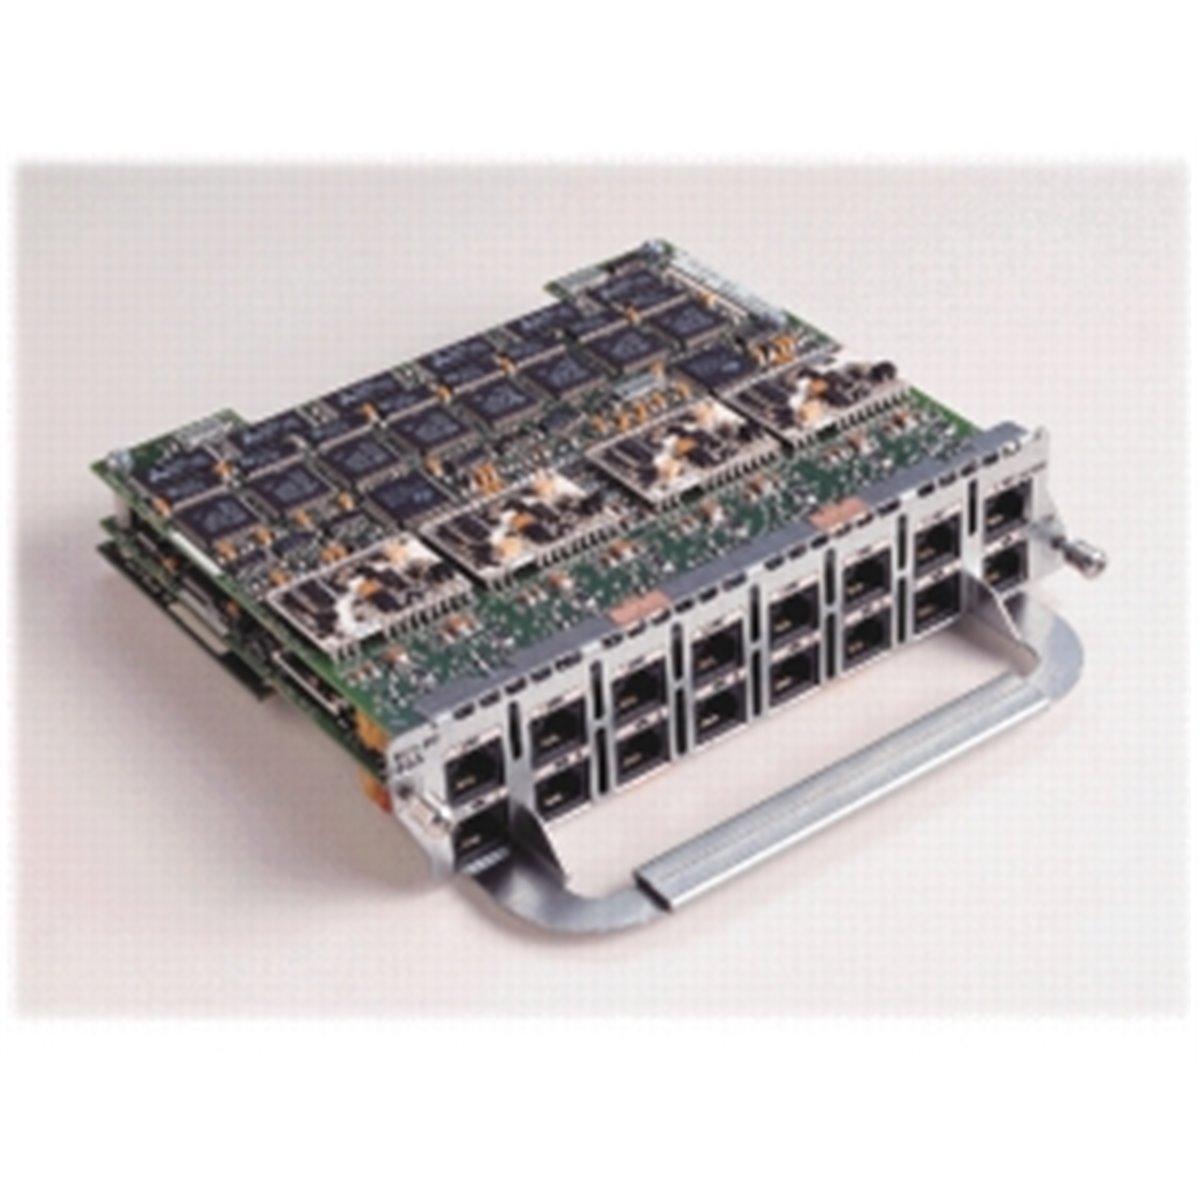 Cisco 16-port analog modems module - 0.00056 Gbit/s - IPX - TCP/IP - ARA - ATCP - Cat5 - 2610 slot - RJ-11